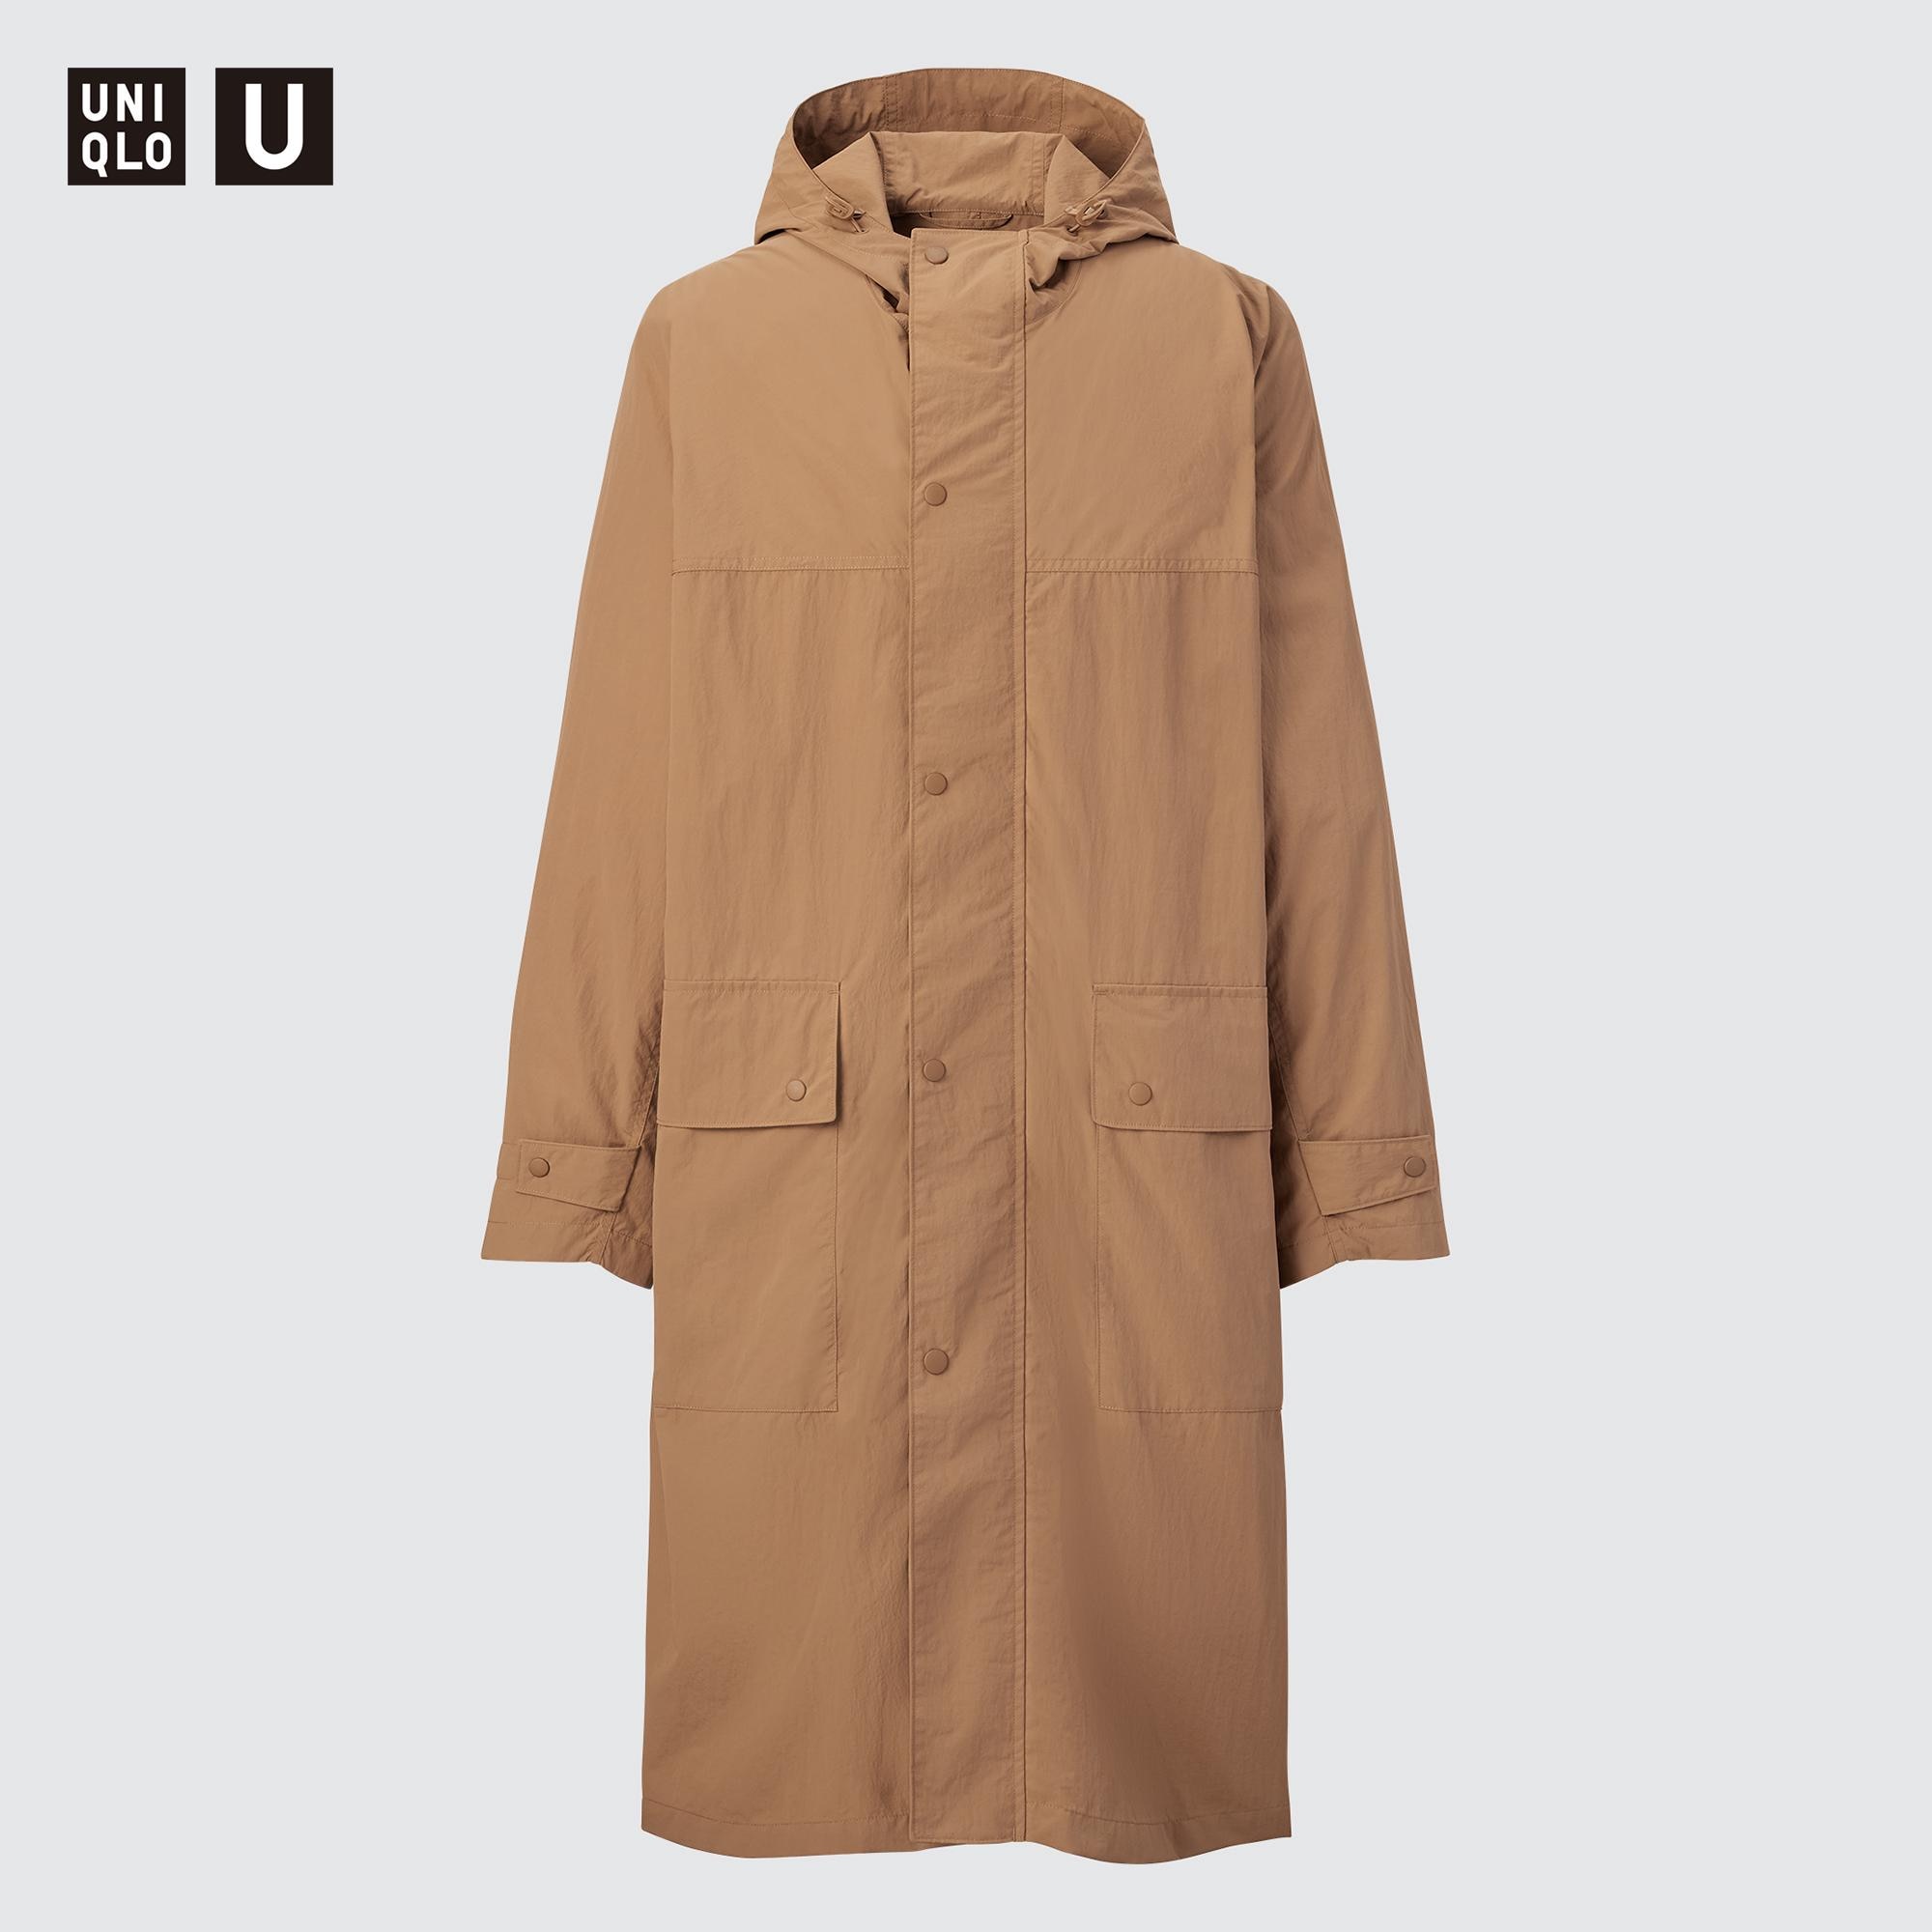 Uniqlo pocketable long coat